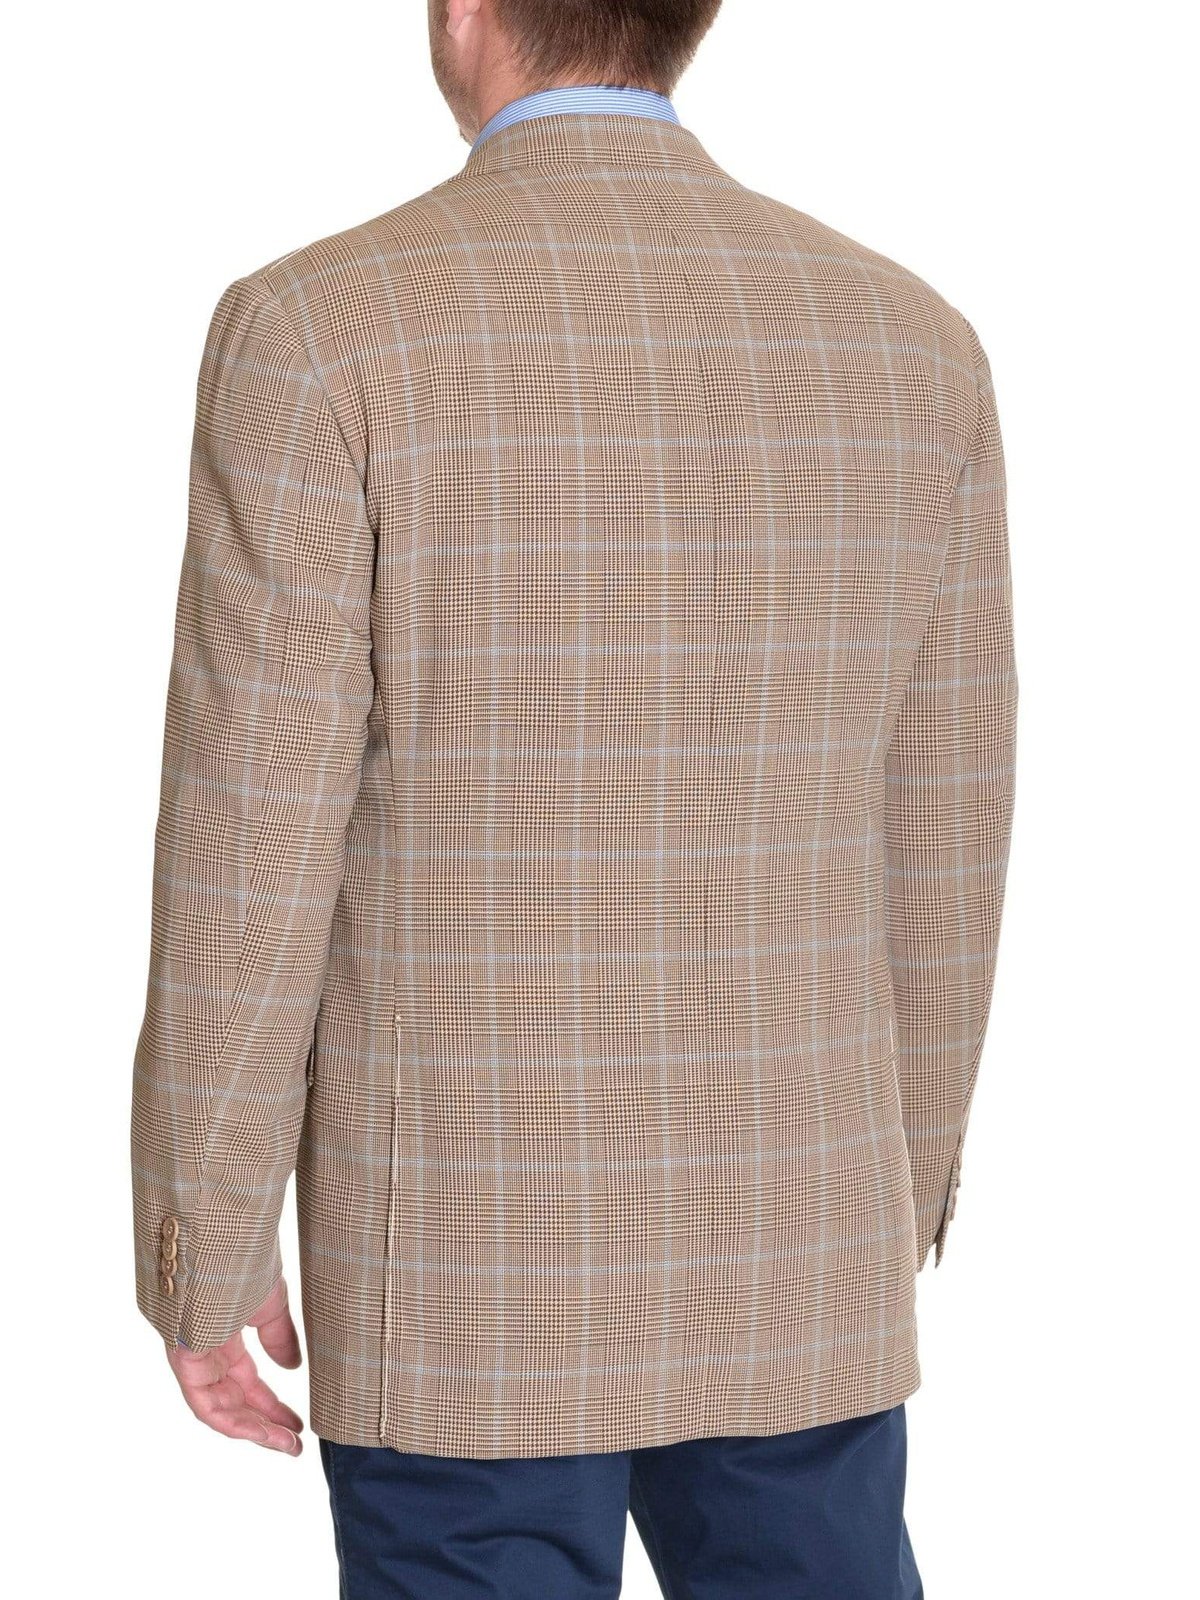 Sartoria Partenopea Italy 40R 50 Brown Glen Plaid Handmade Wool Blazer Sportcoat - The Suit Depot